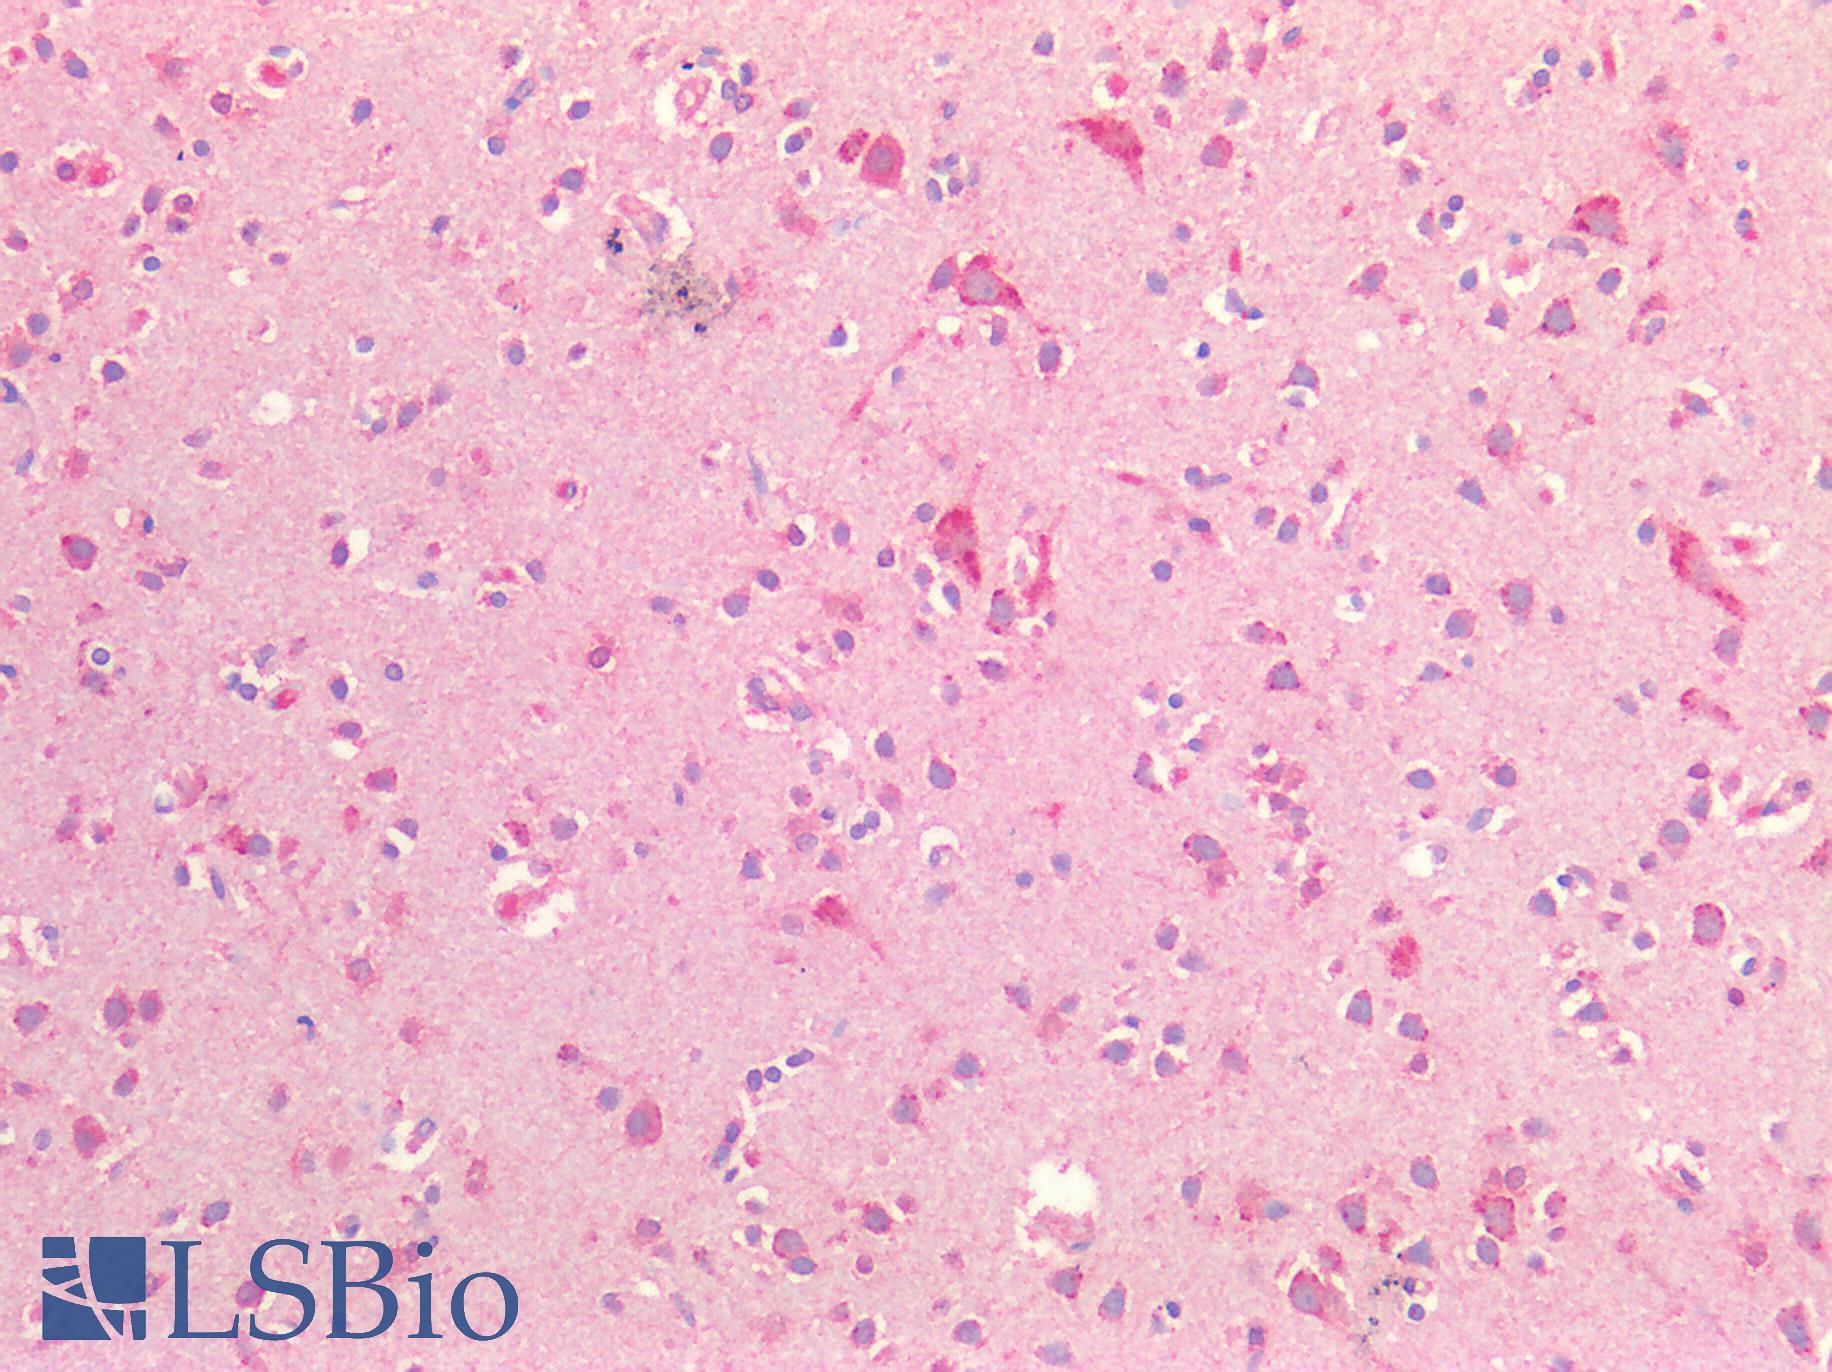 5-Alpha Reductase / SRD5A1 Antibody - Human Brain, Cortex: Formalin-Fixed, Paraffin-Embedded (FFPE)